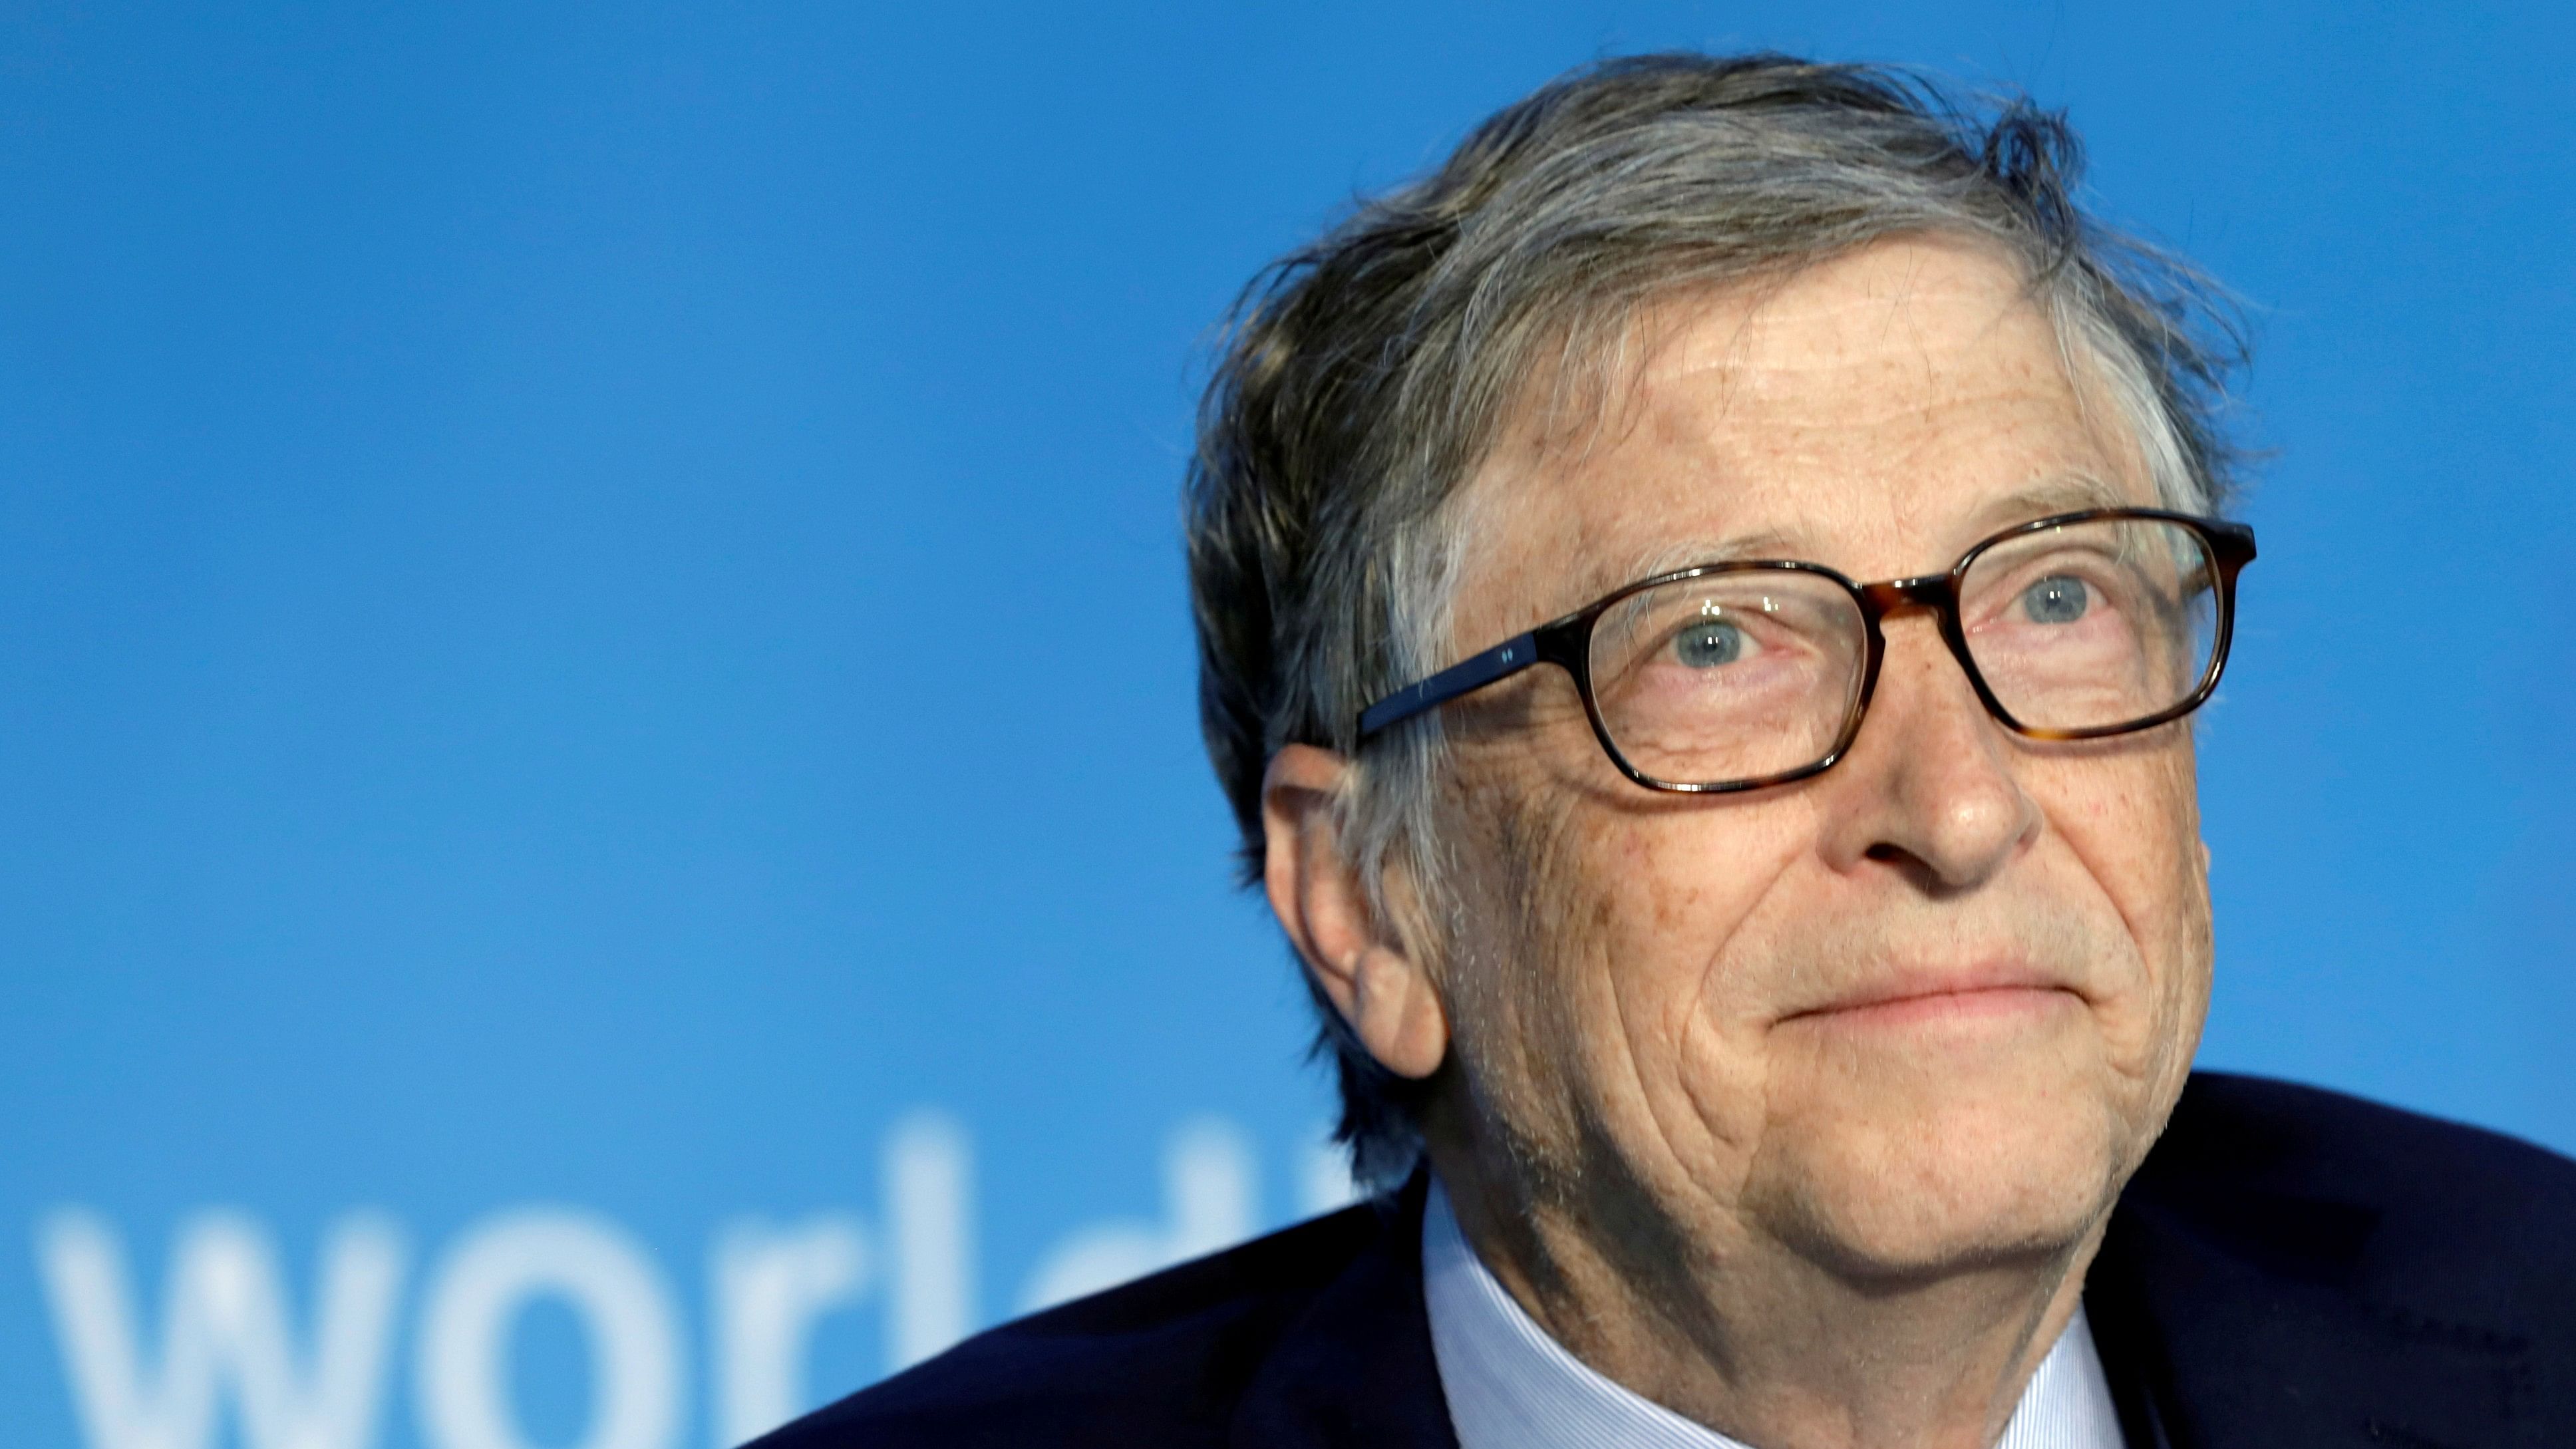 <div class="paragraphs"><p>Microsoft founder and billionaire Bill Gates.</p></div>